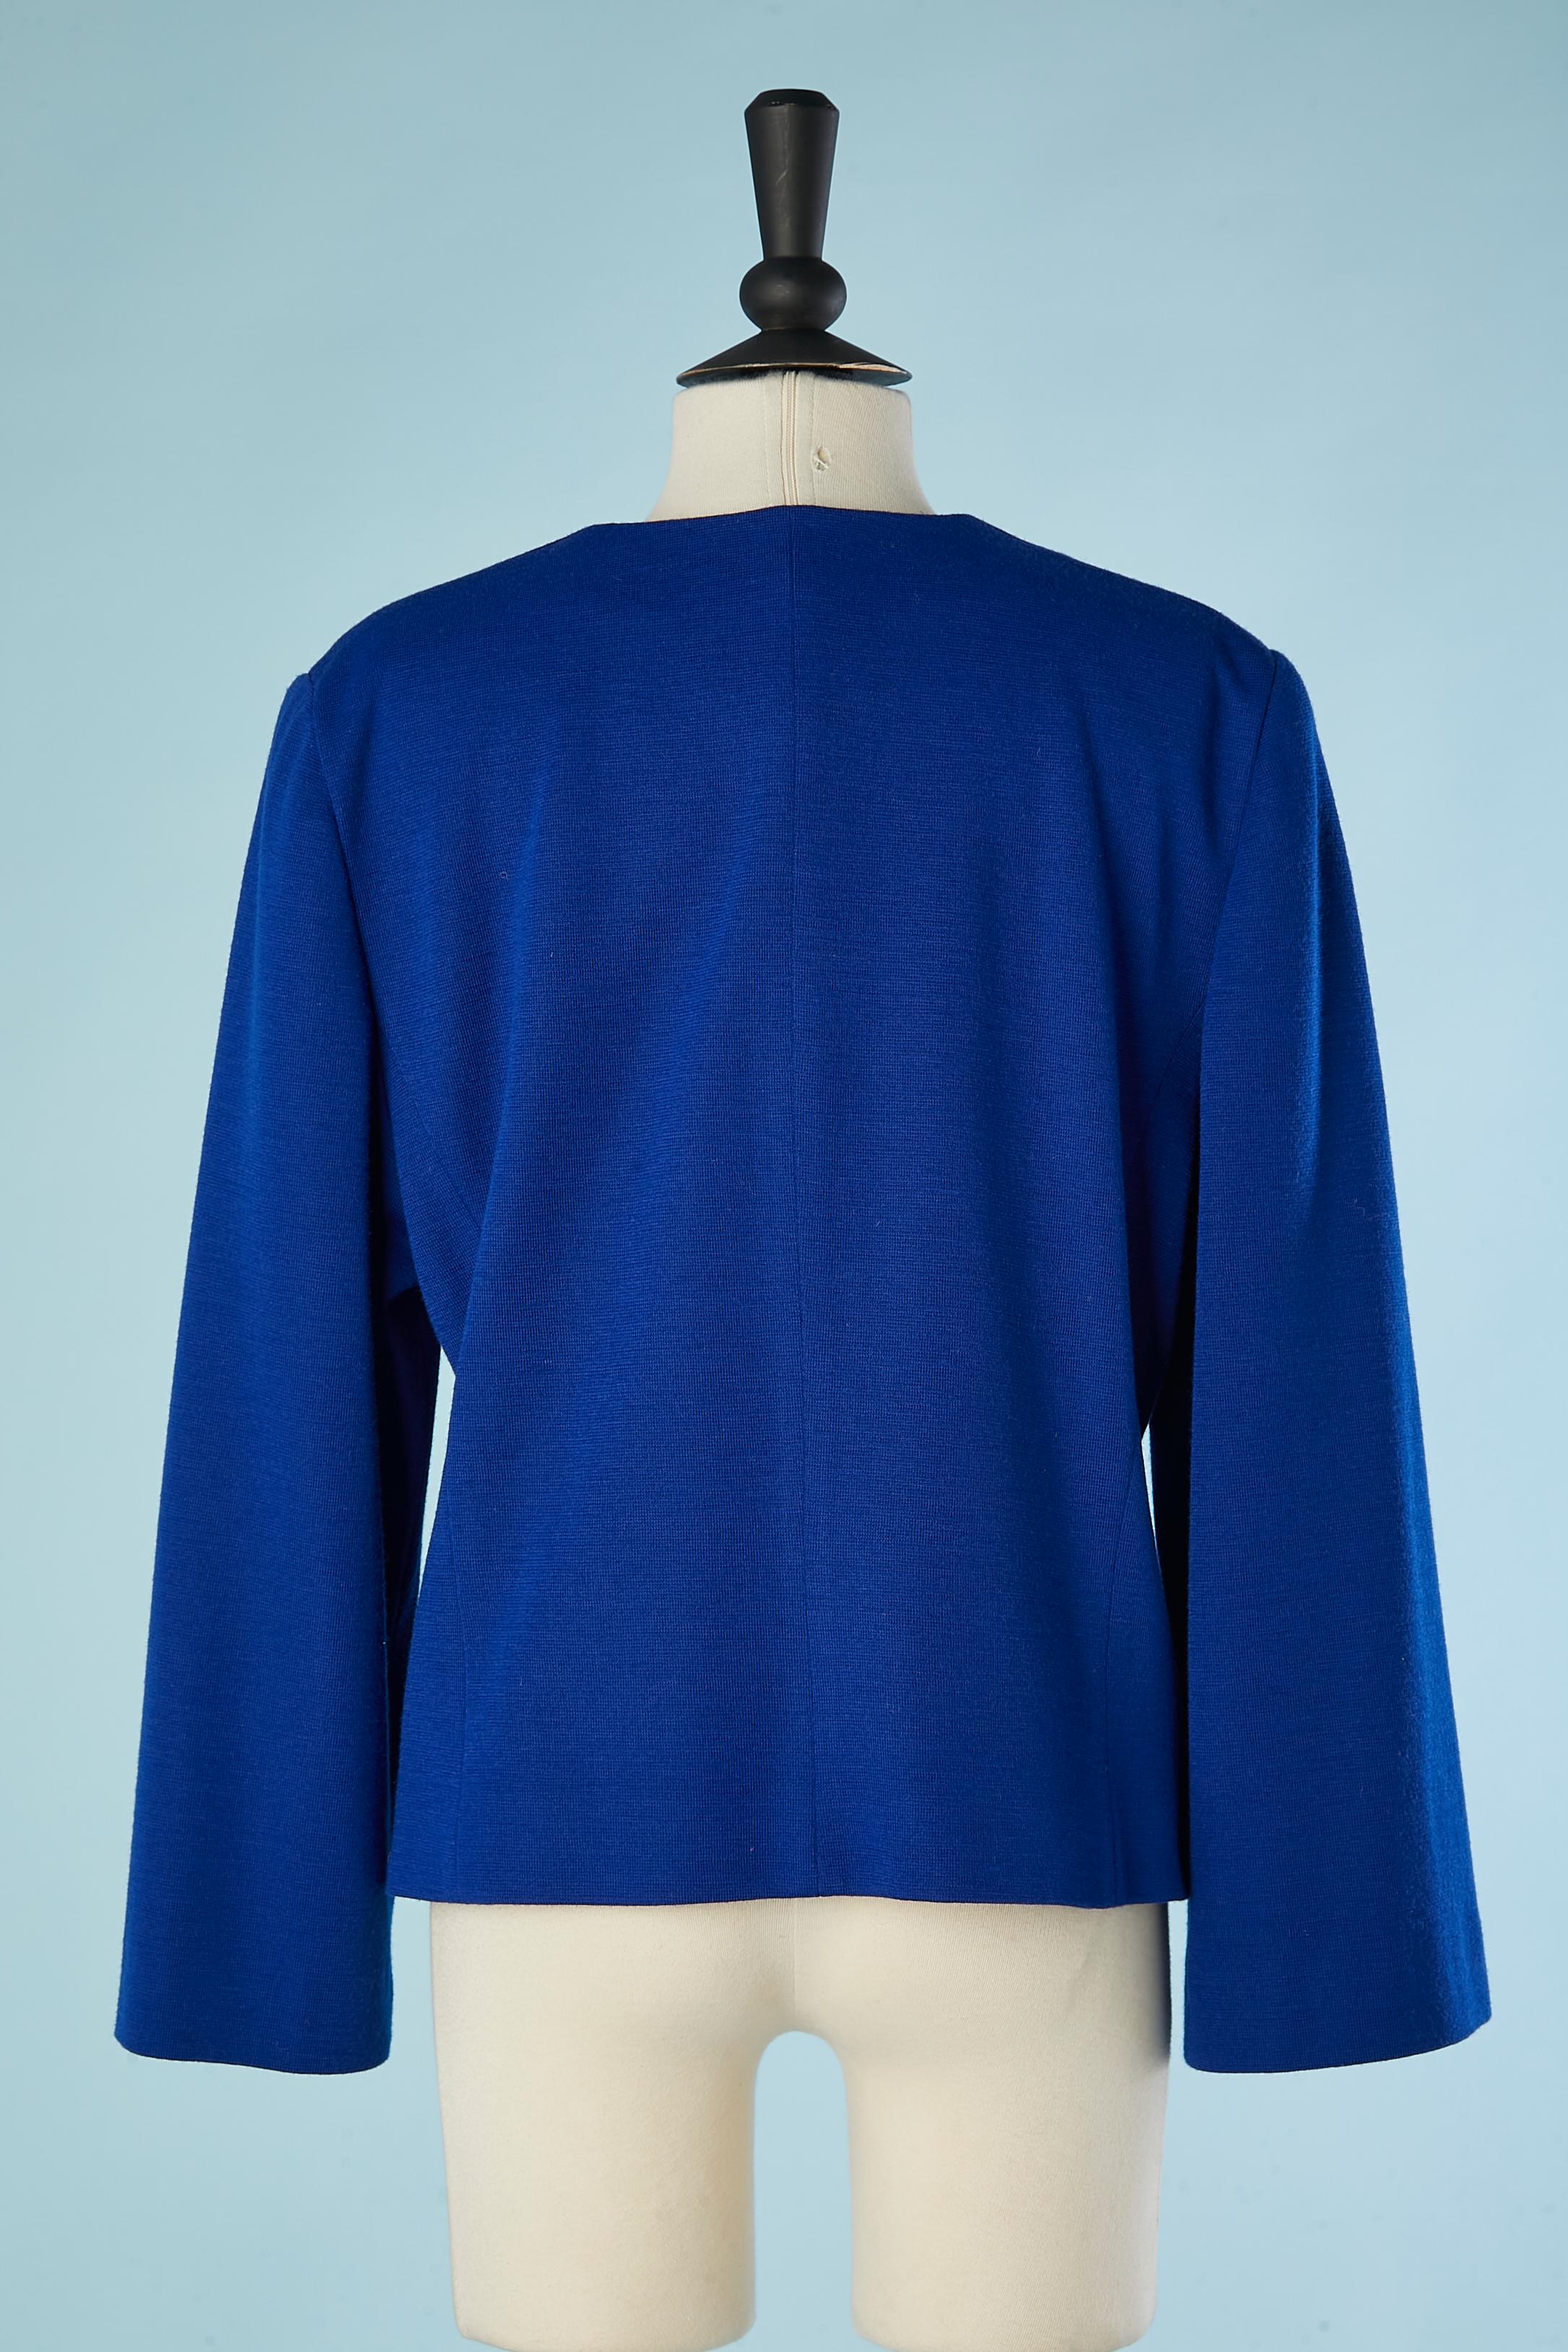 Women's Blue wool jersey jacket with black buttons Pierre Cardin  For Sale